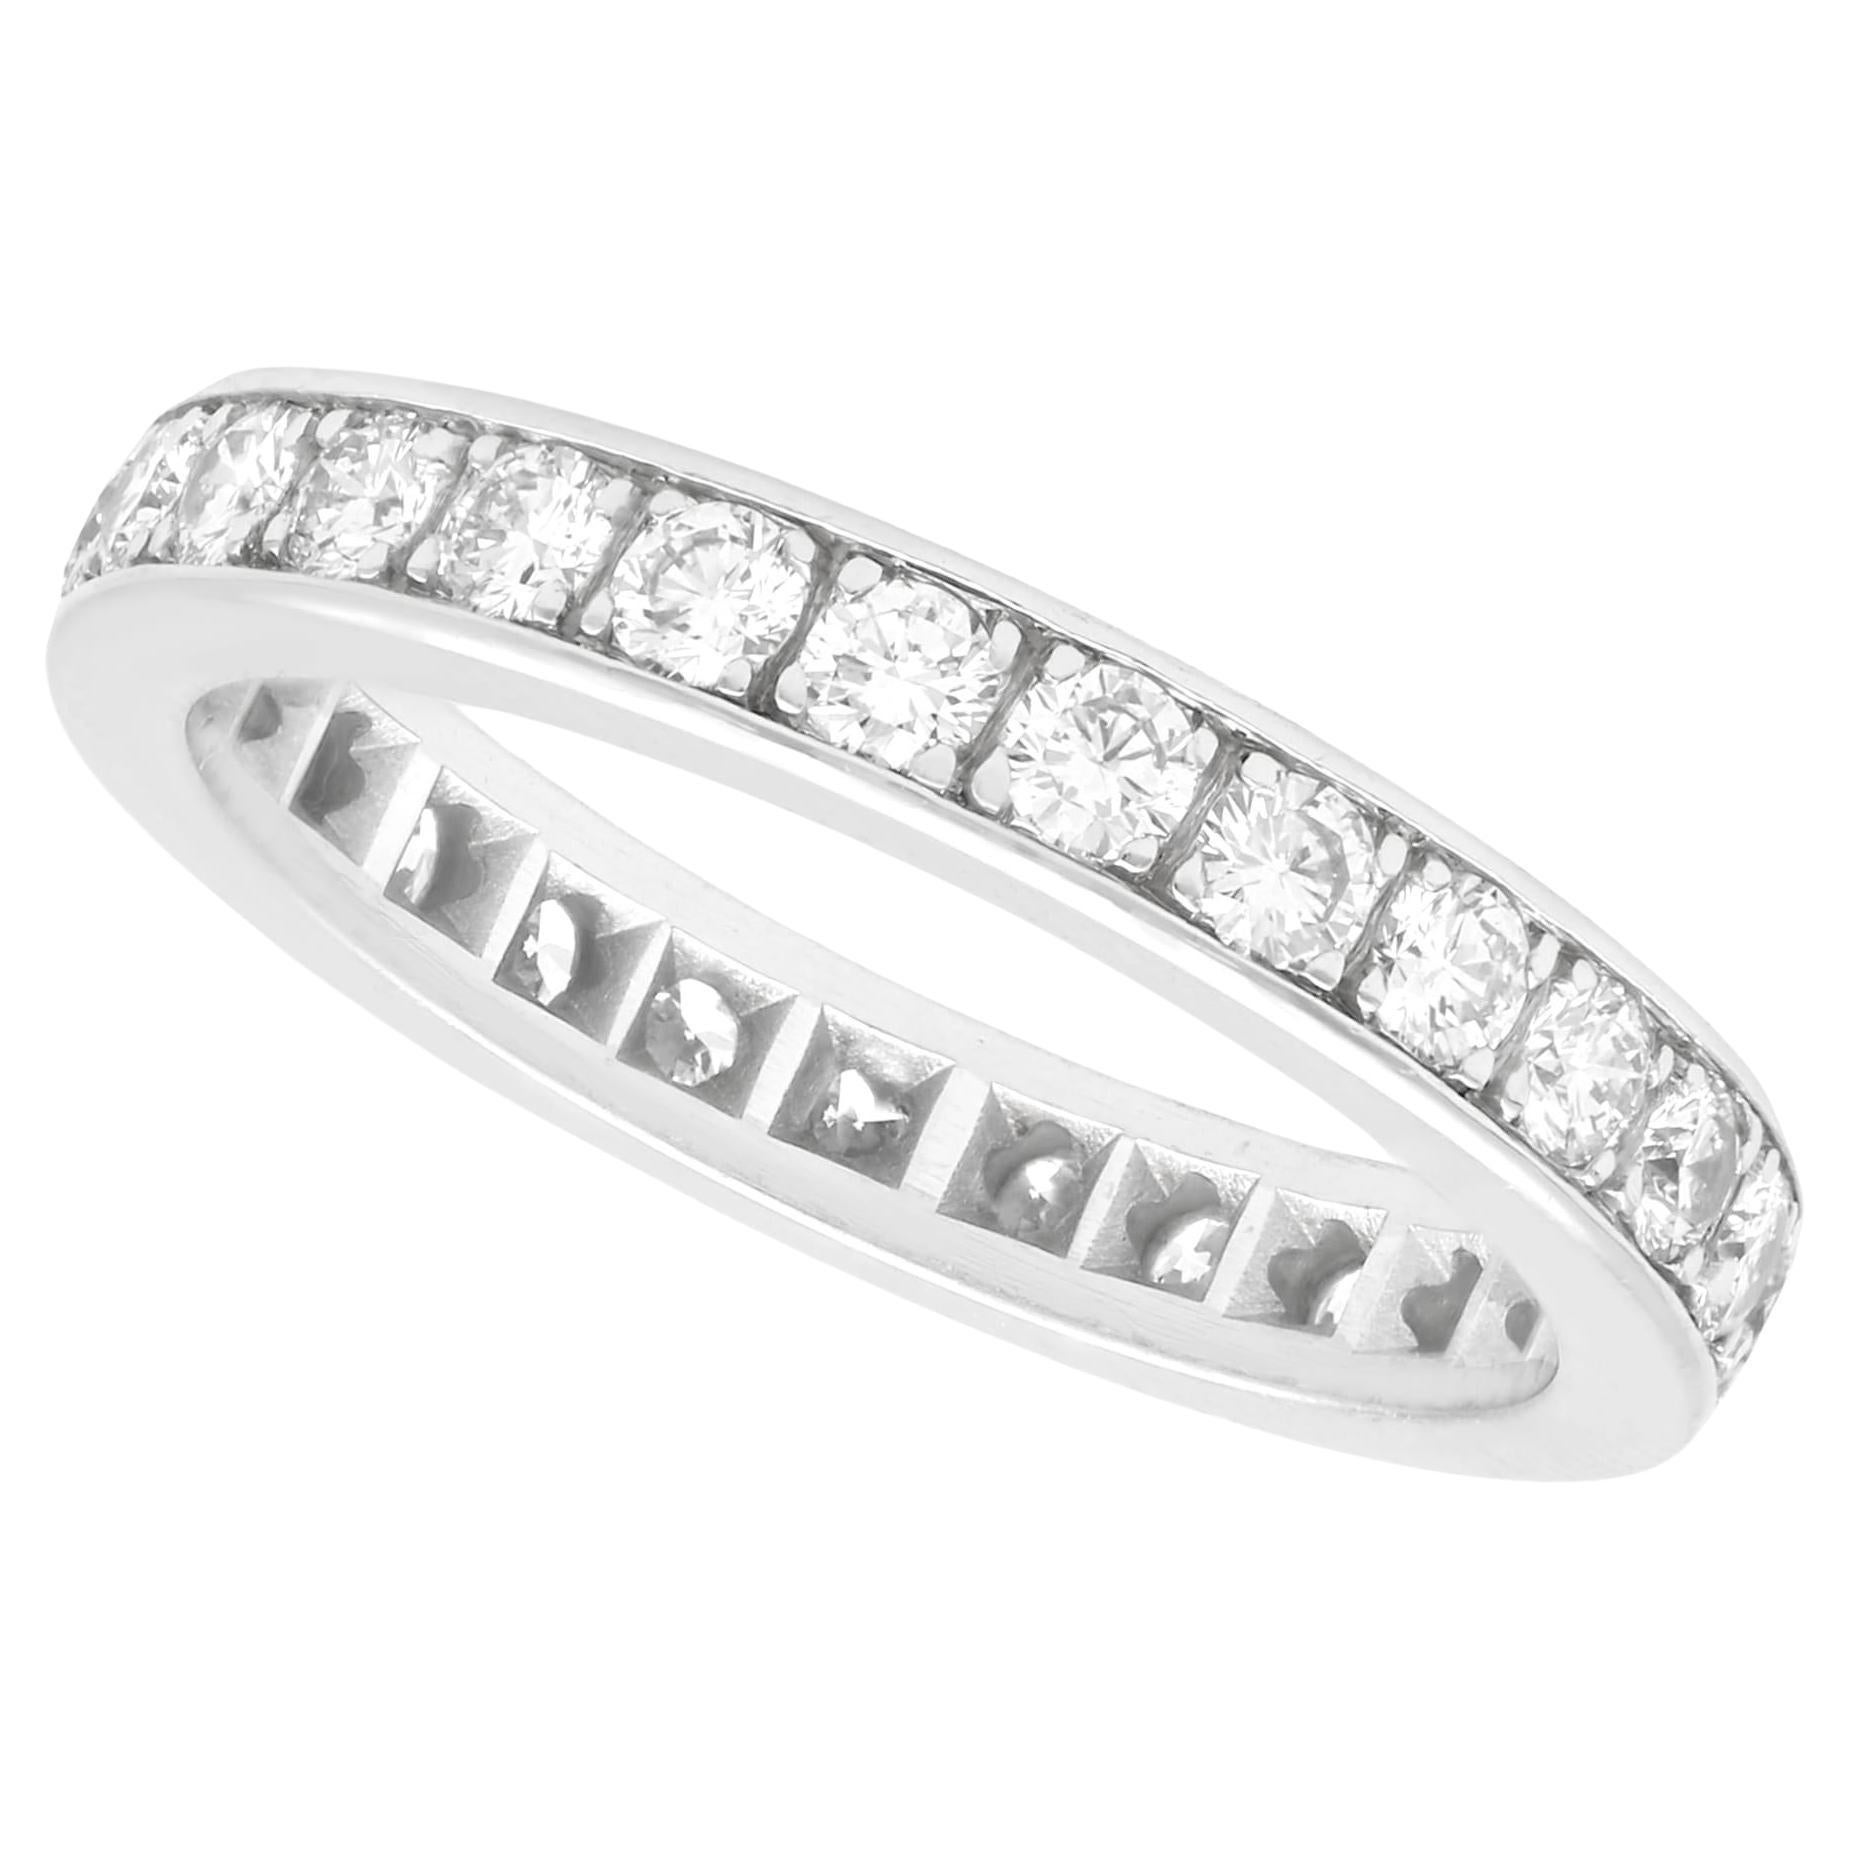 1970s Vintage 1.25 Carat Diamond and White Gold Full Eternity Ring